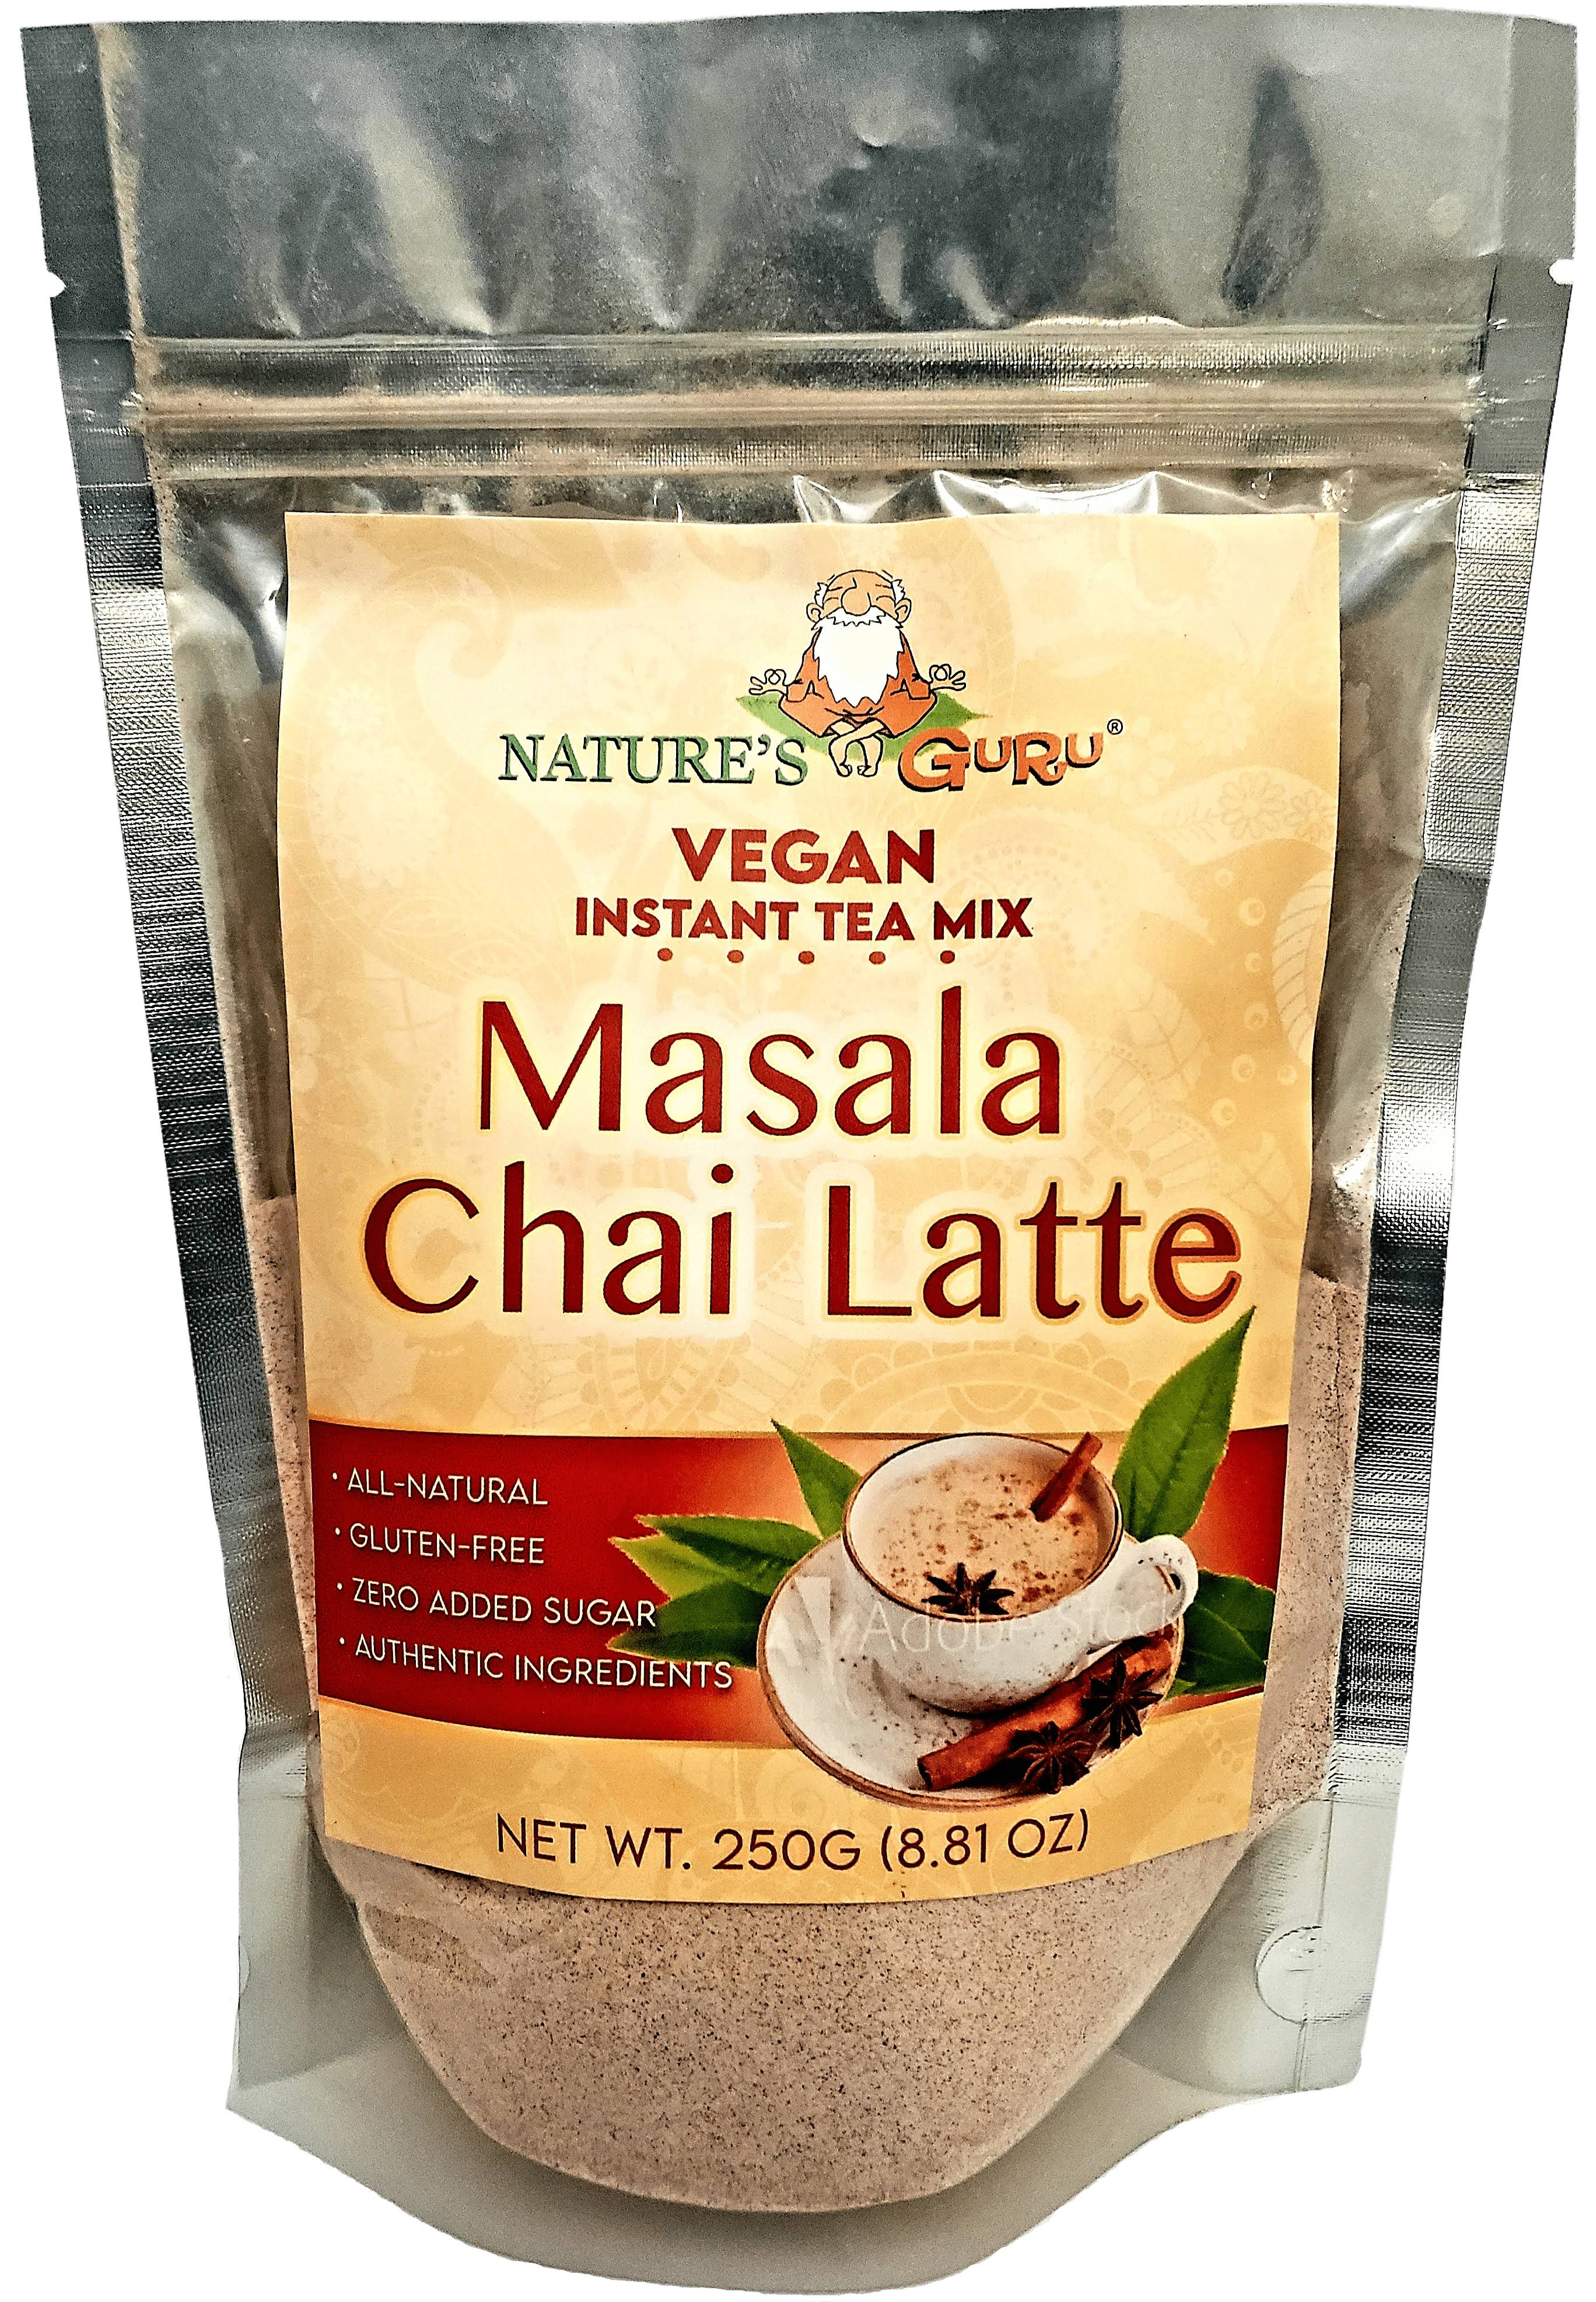 Vegan Masala Chai Latte Instant Tea Mix